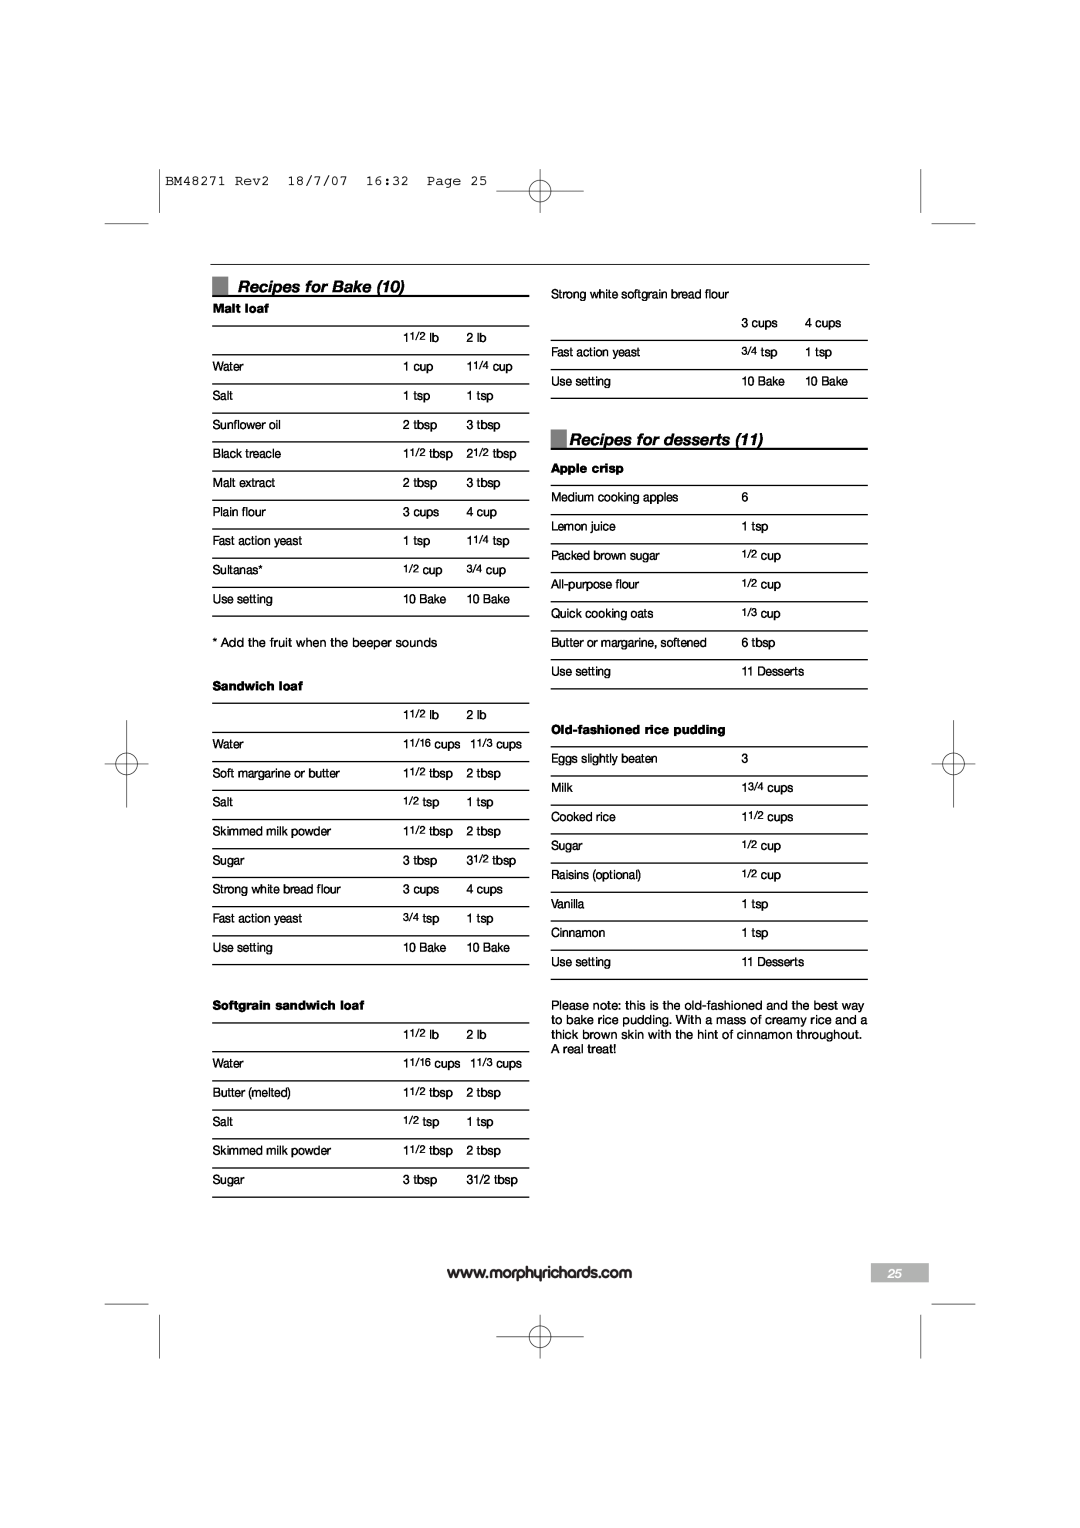 Morphy Richards manual Recipes for Bake, Recipes for desserts, BM48271 Rev2 18/7/07 16 32 Page 